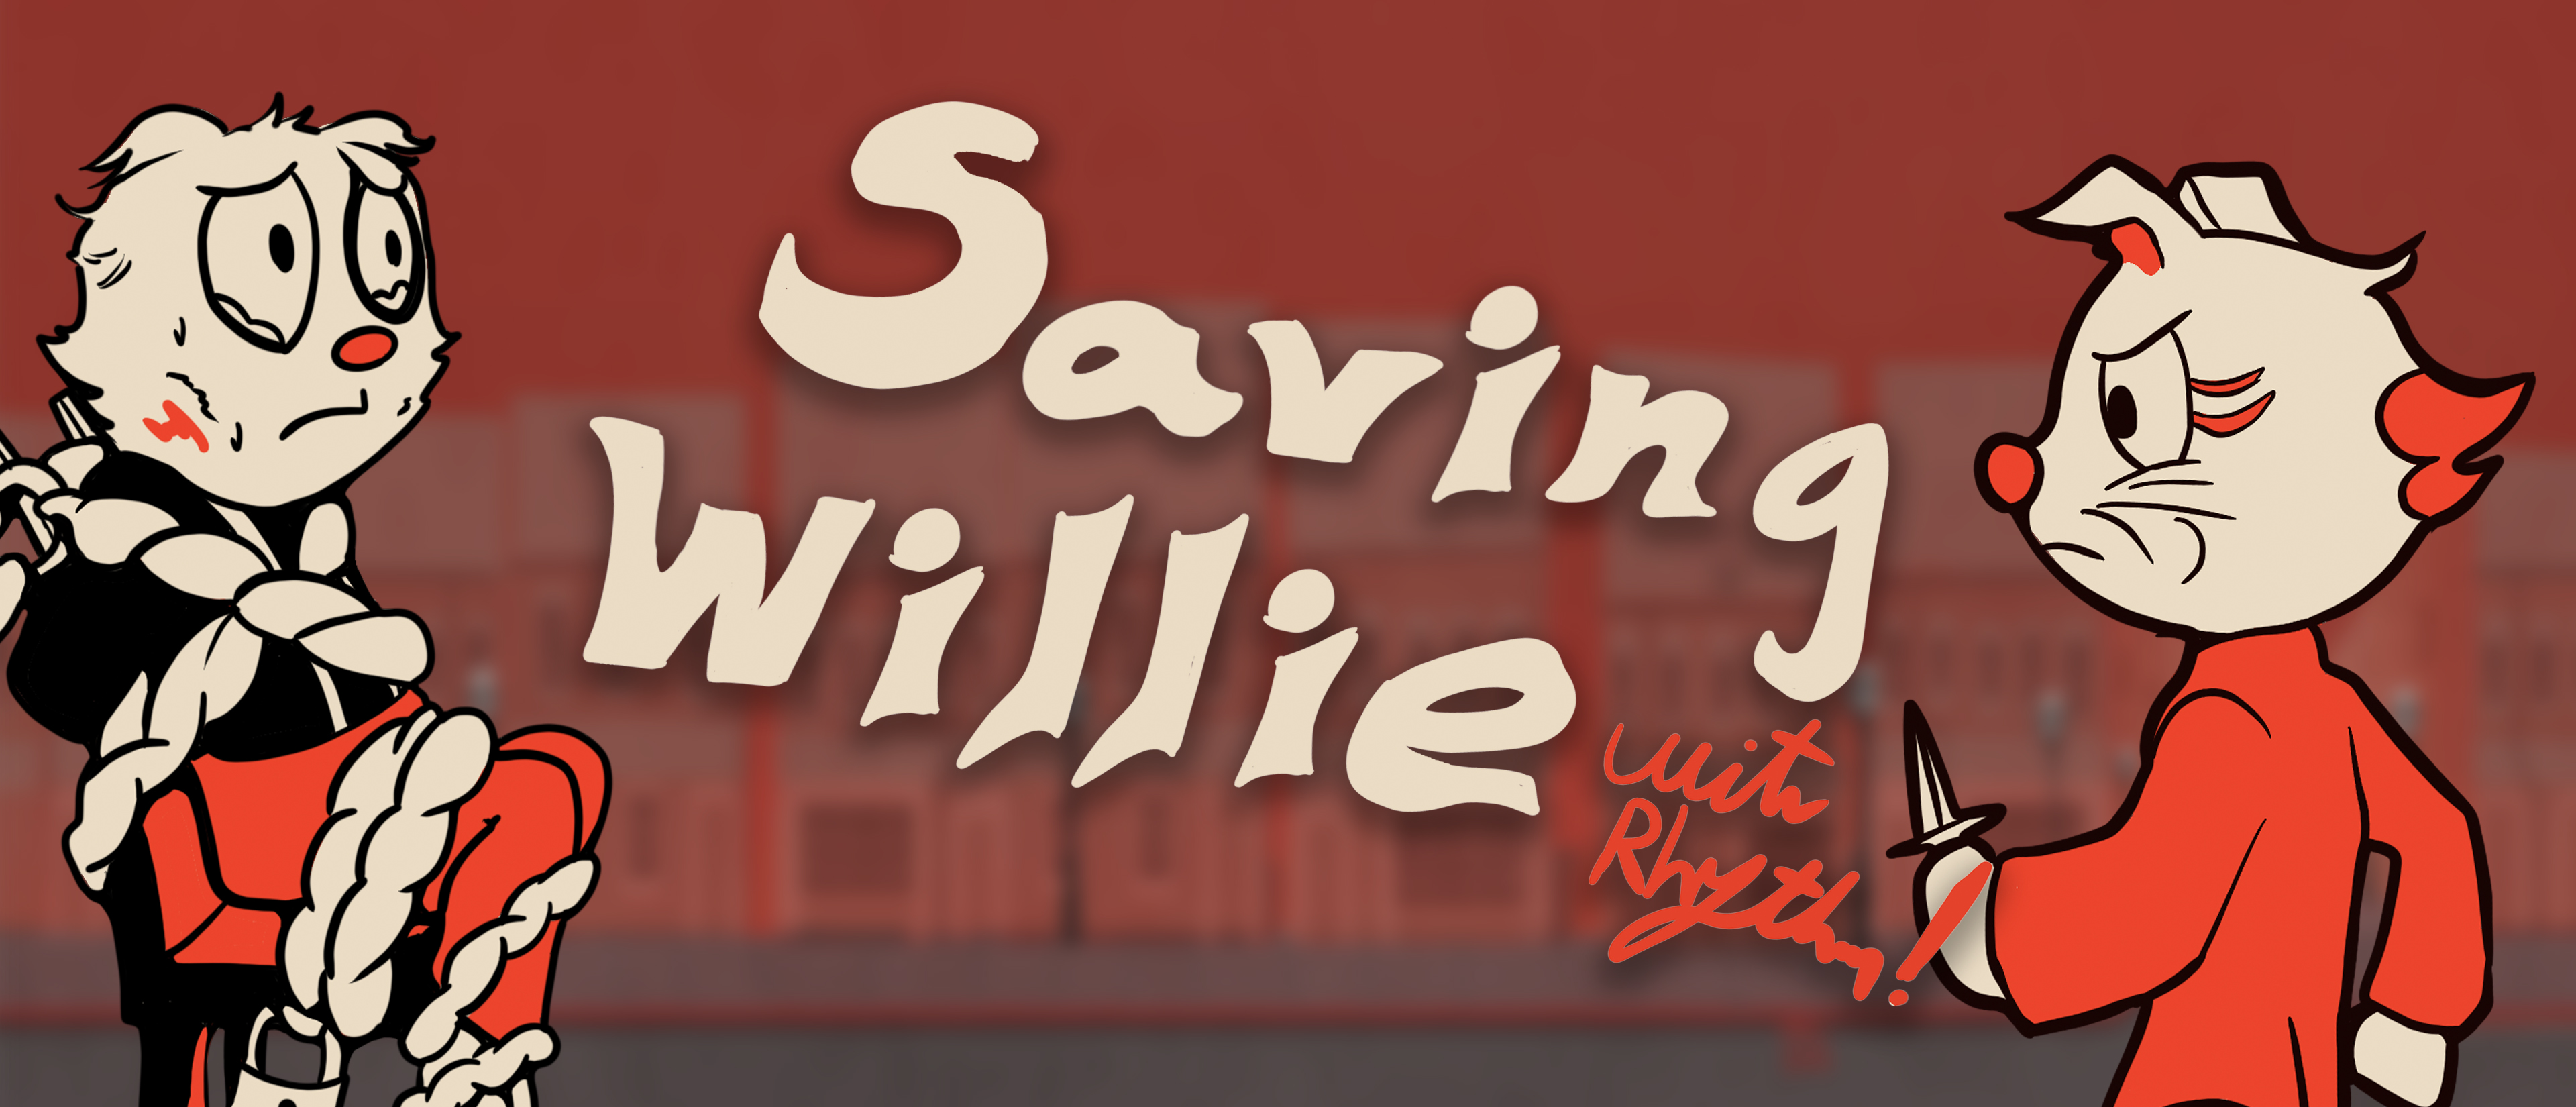 Saving Willy (with rhythm)